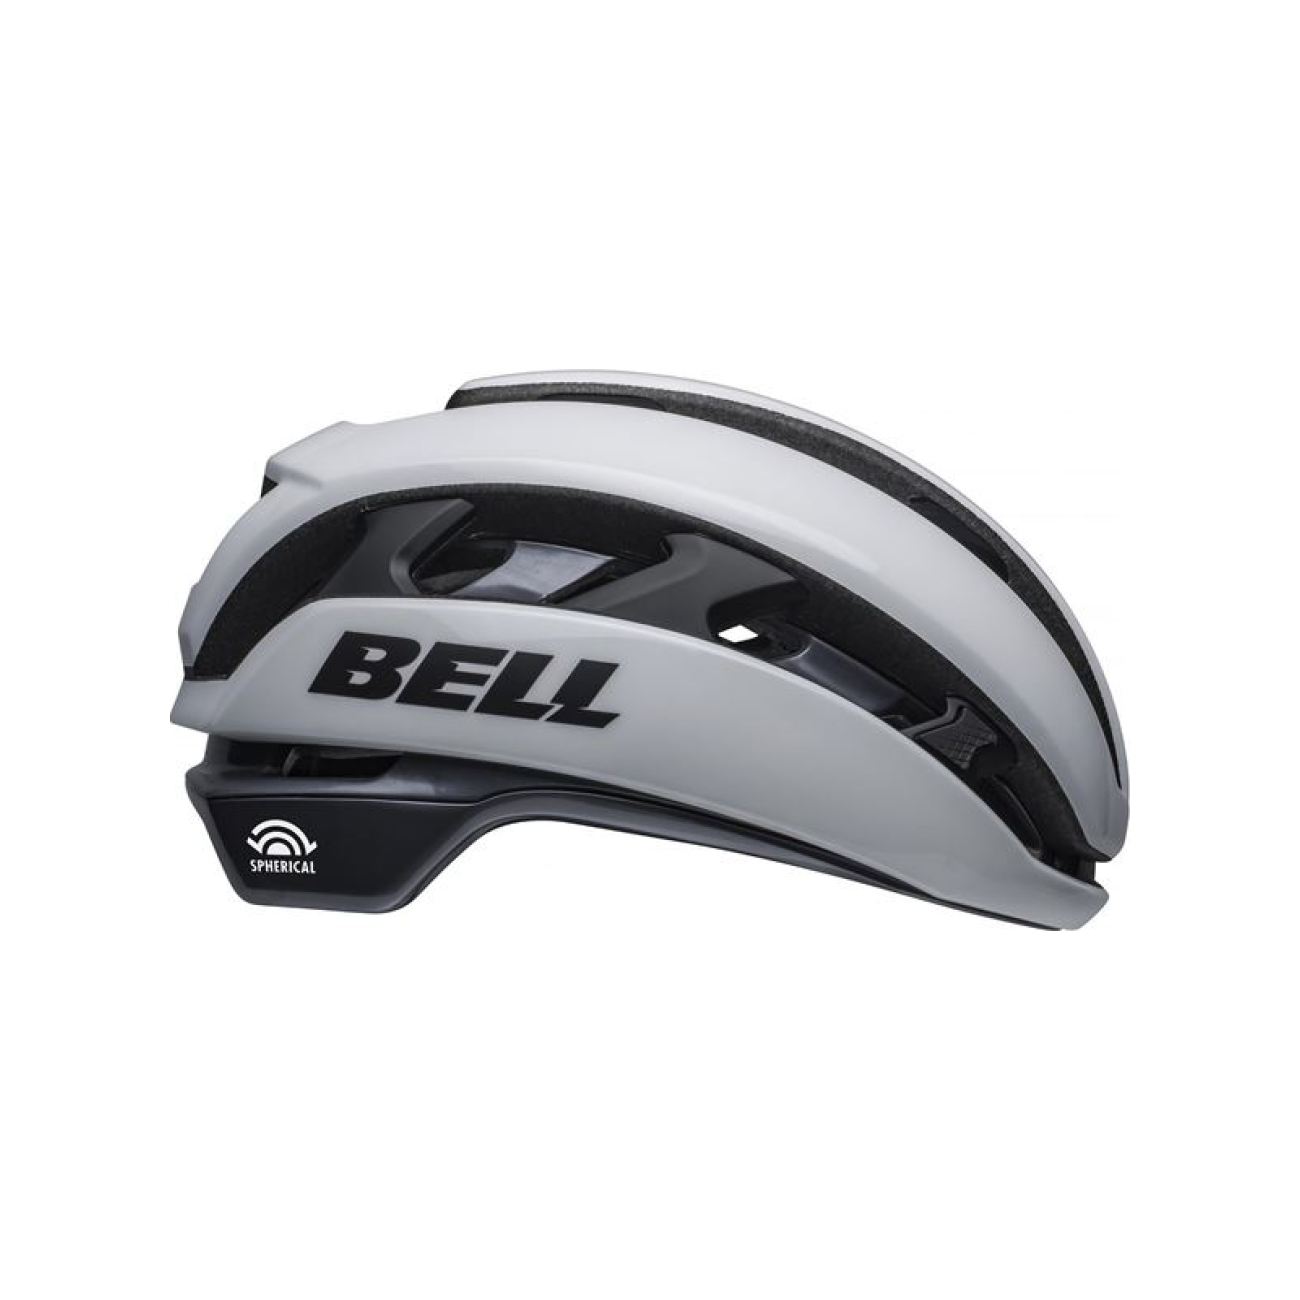 BELL Kerékpáros Sisak - XR SPHERICAL - Fehér/fekete